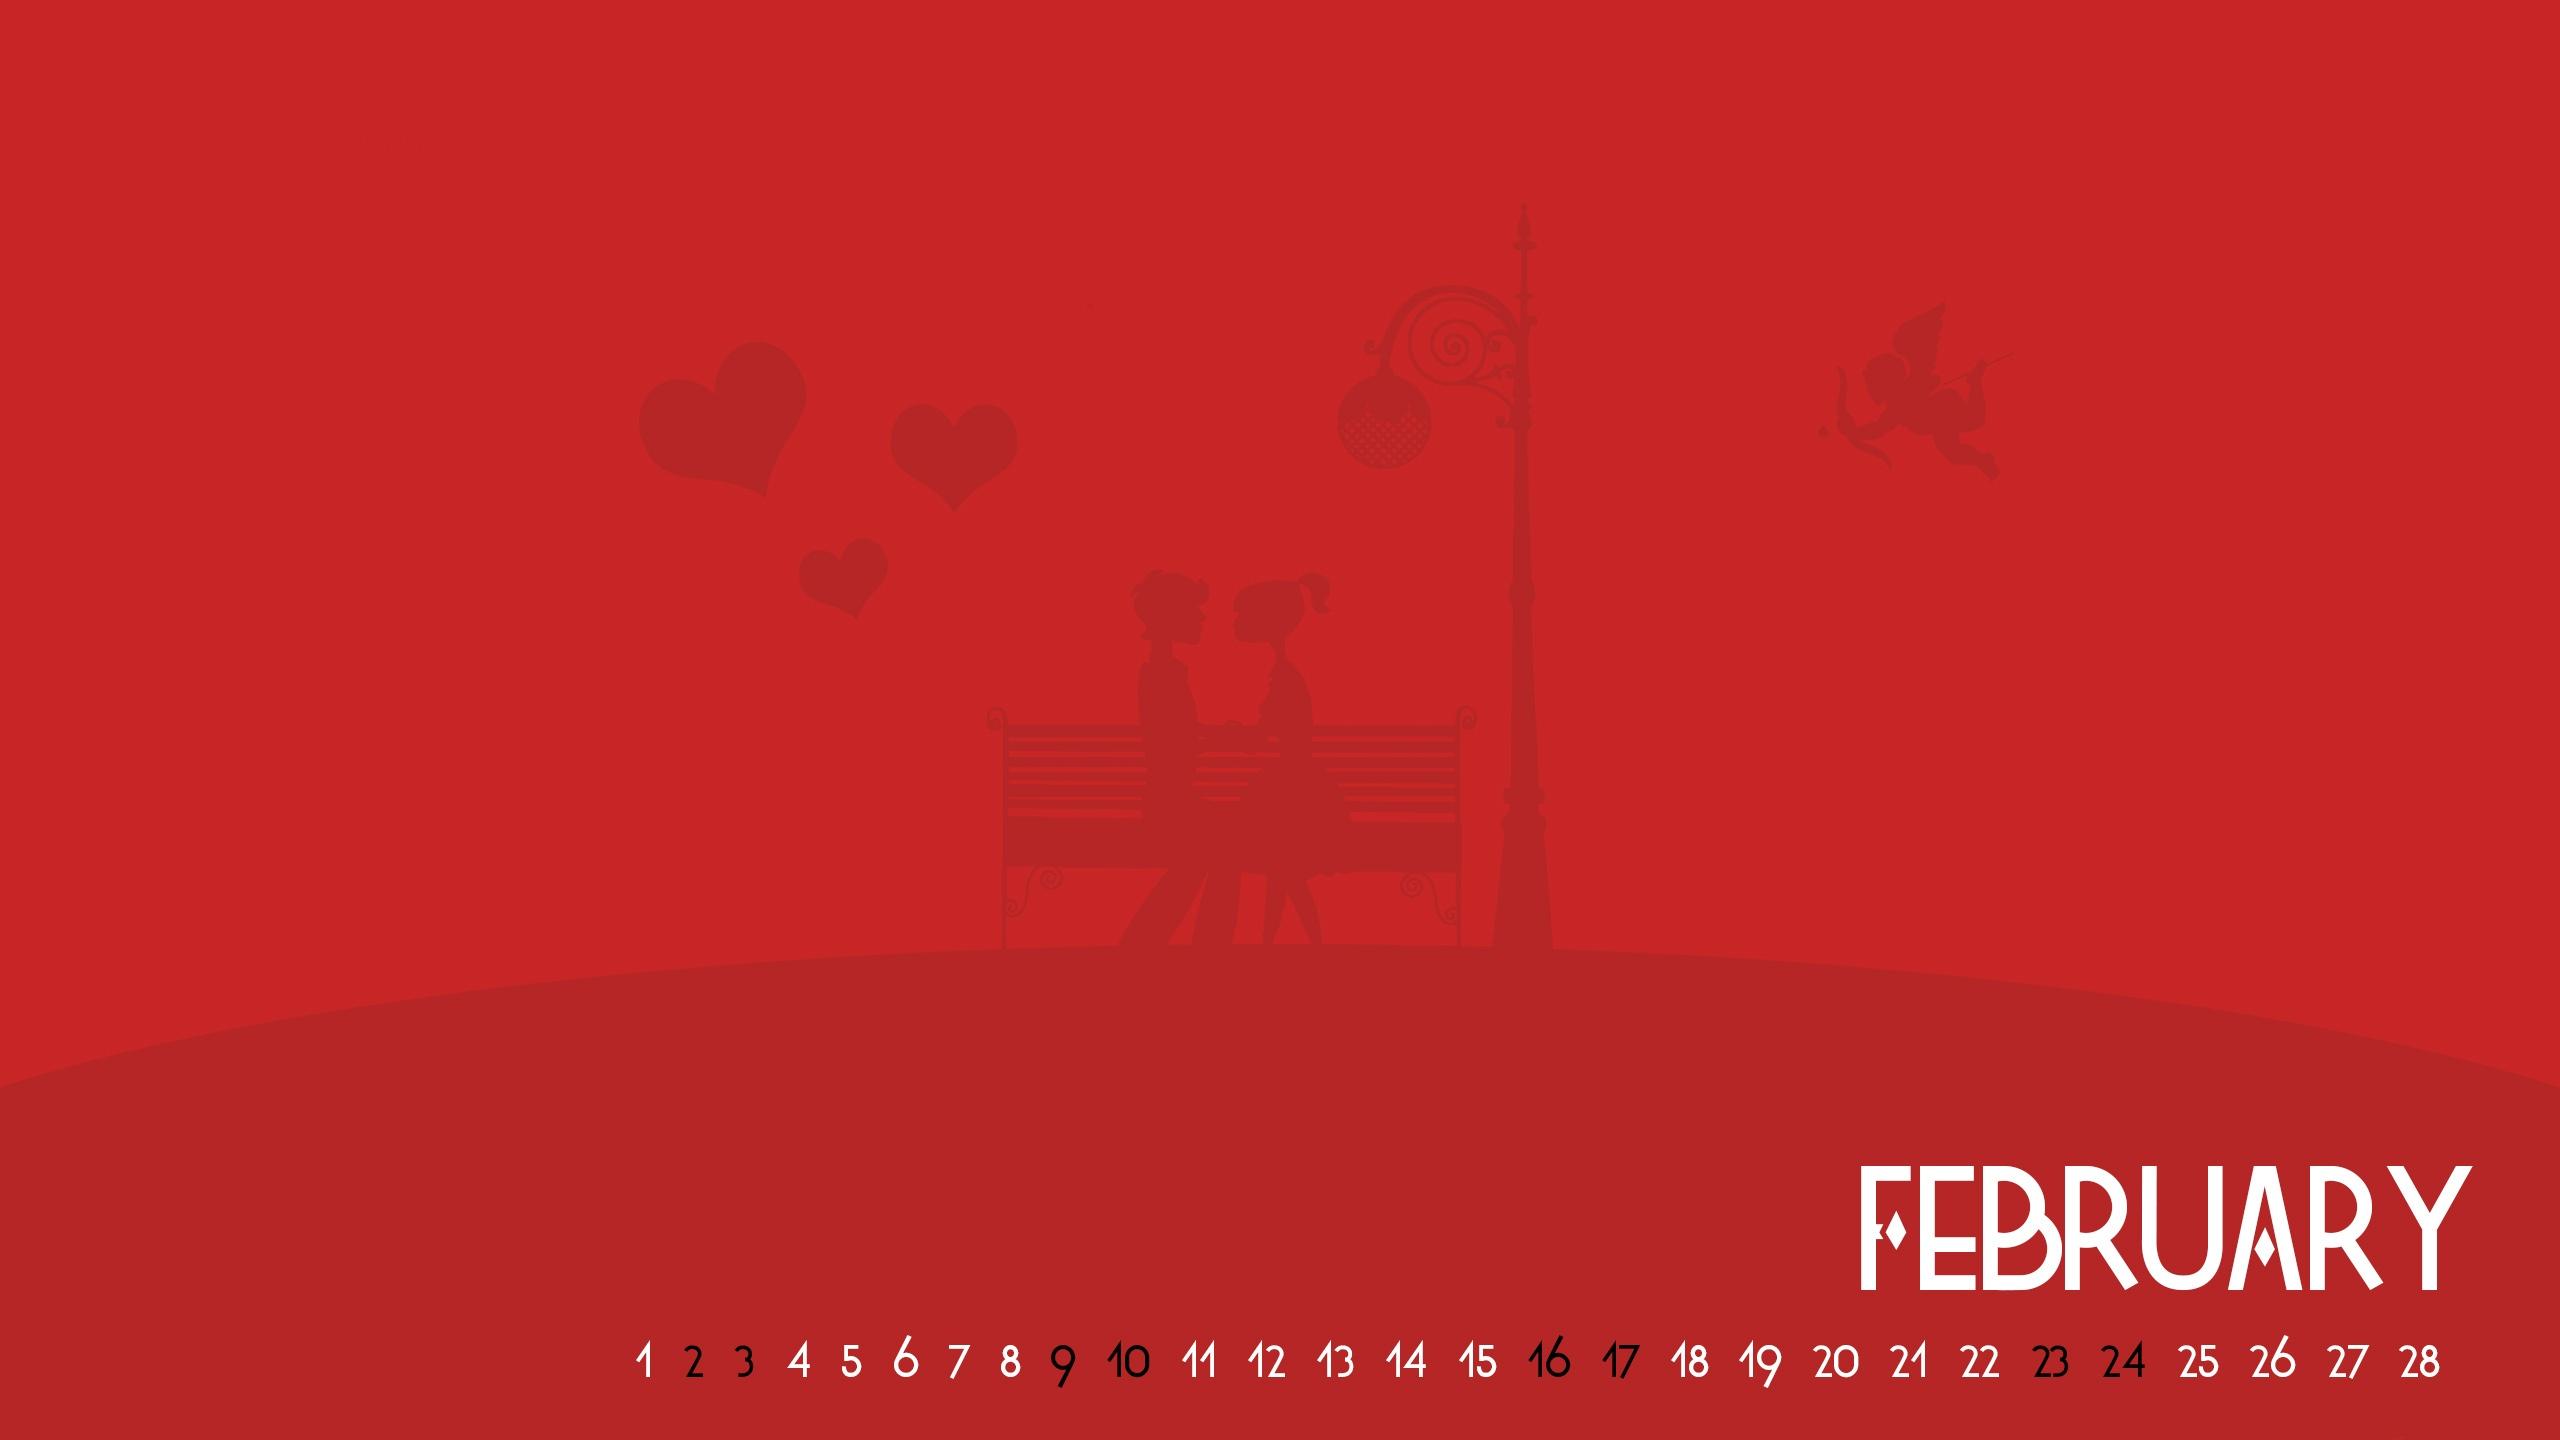 February Valentine Calendar Wallpaper in jpg format